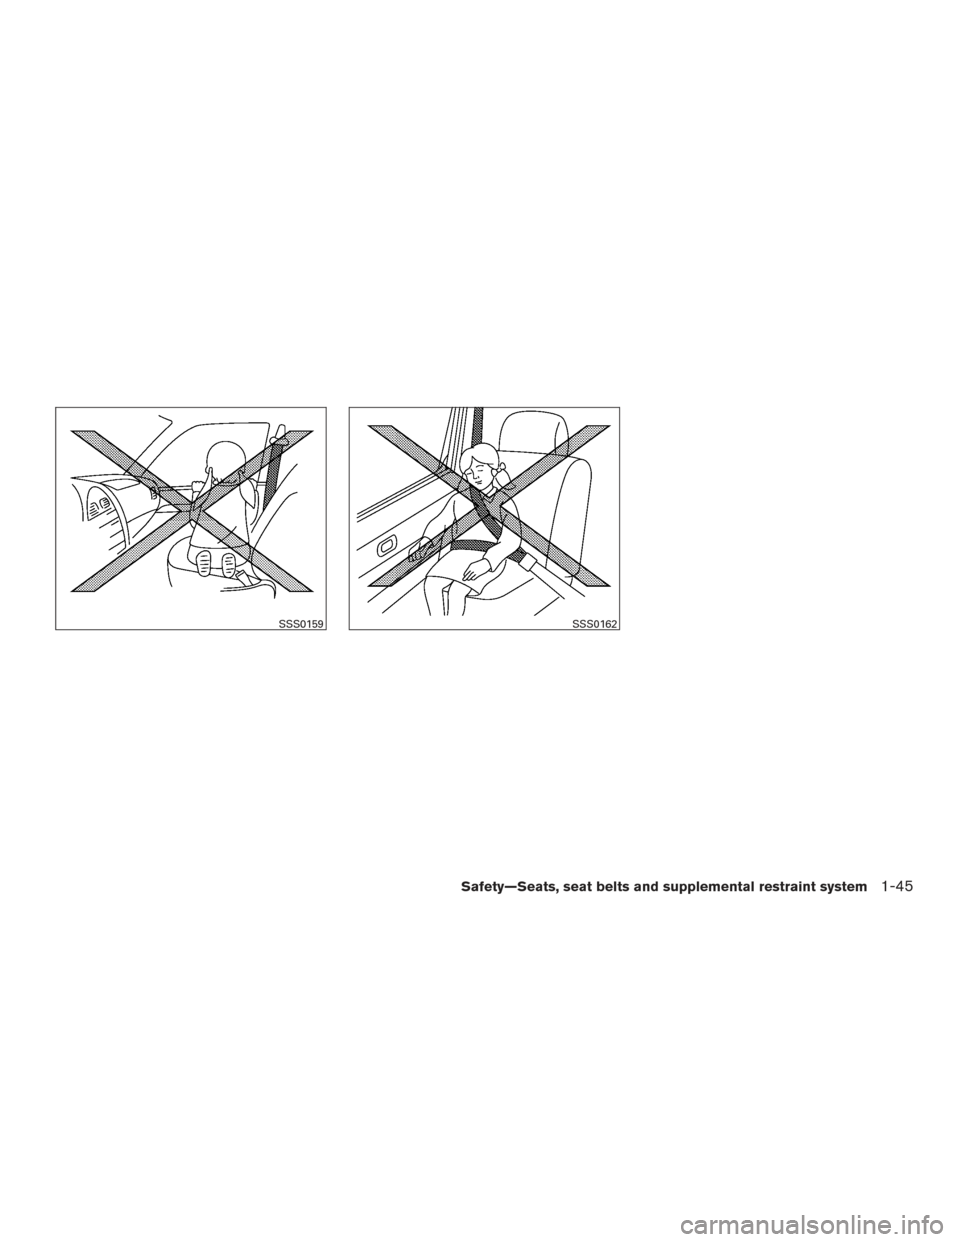 NISSAN VERSA SEDAN 2015 2.G Repair Manual SSS0159SSS0162
Safety—Seats, seat belts and supplemental restraint system1-45 